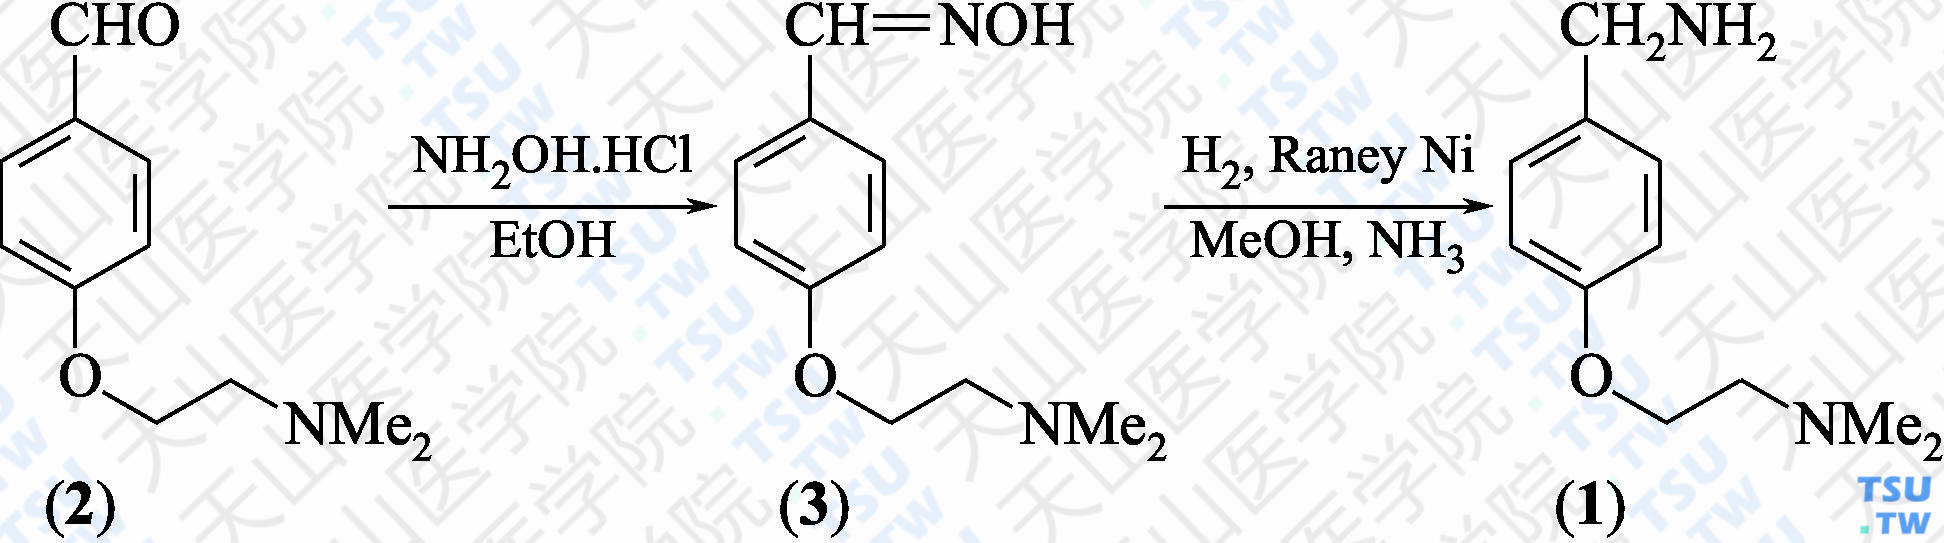 4-[2-（二甲基氨基）乙氧基]苄胺（分子式：C<sub>11</sub>H<sub>18</sub>N<sub>2</sub>O）的合成方法路线及其结构式